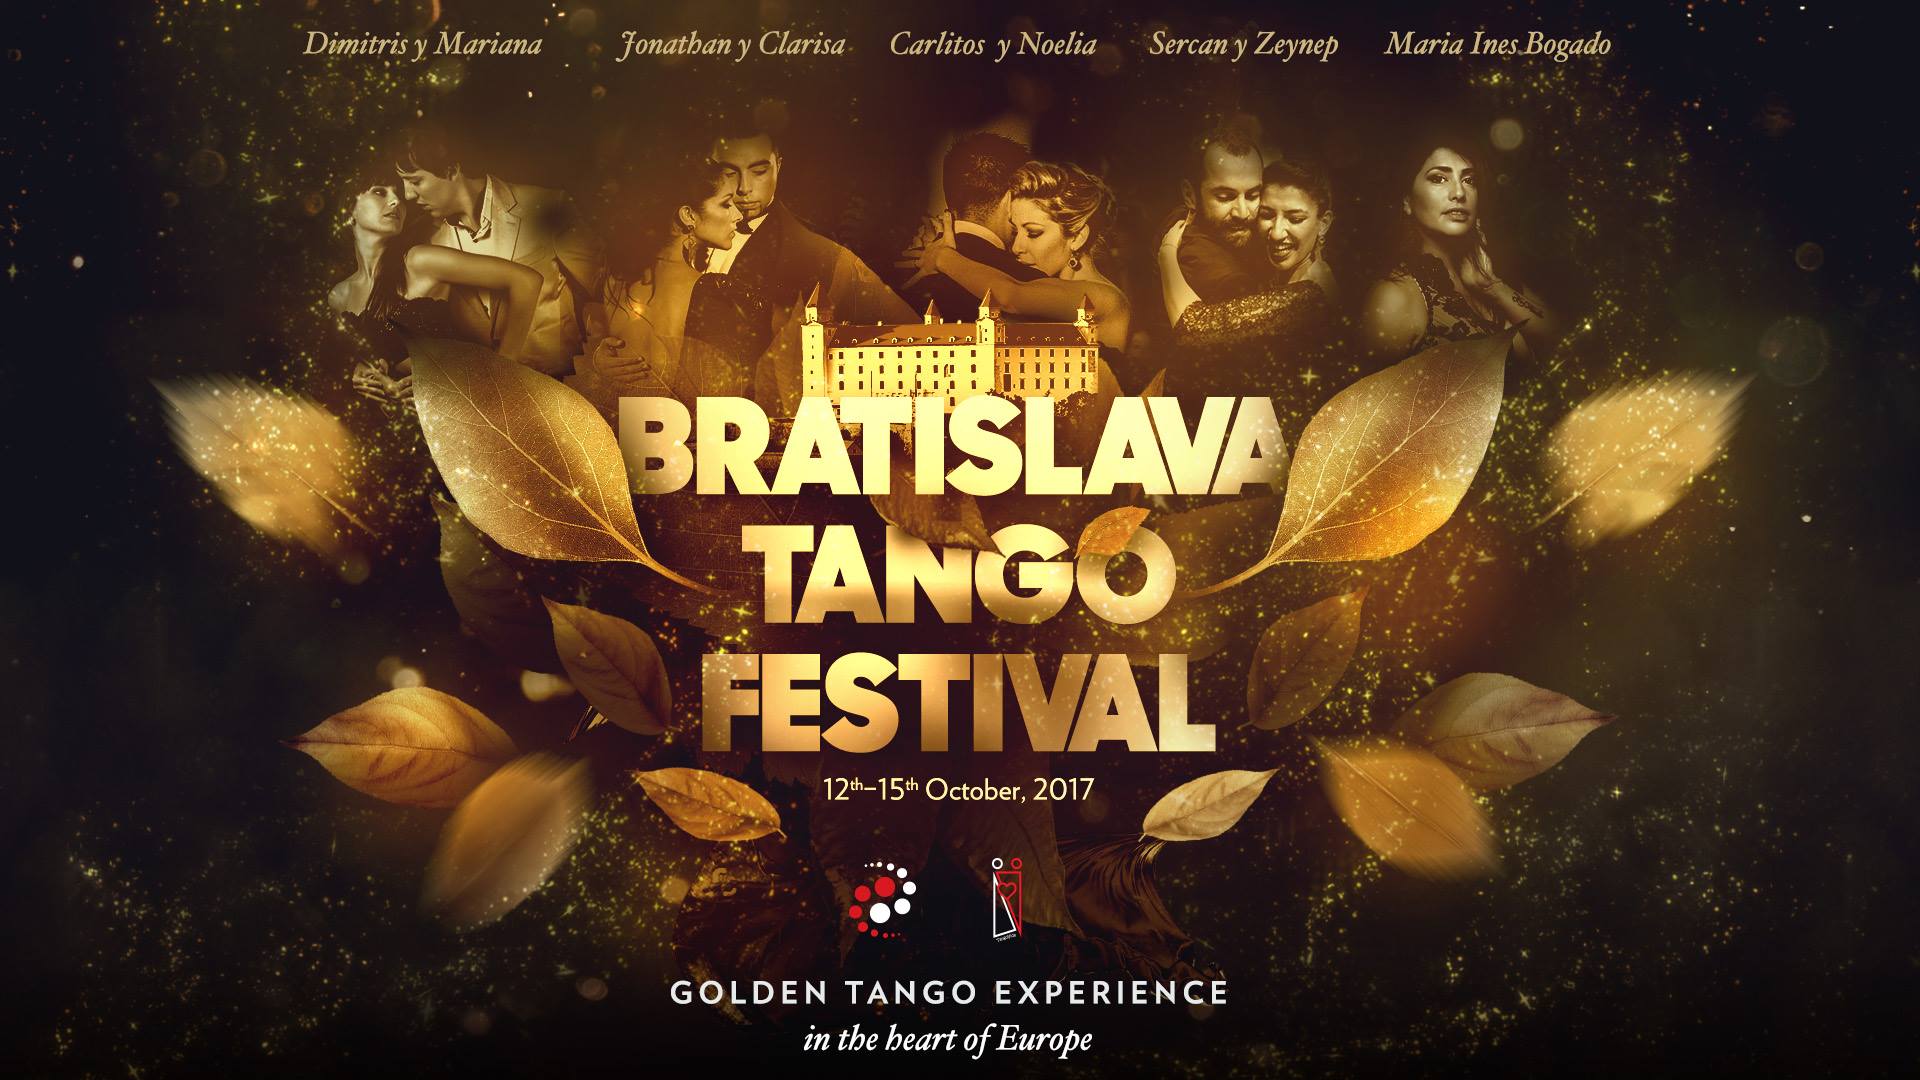 Bratislava Tango Festival 2017 Preview Image